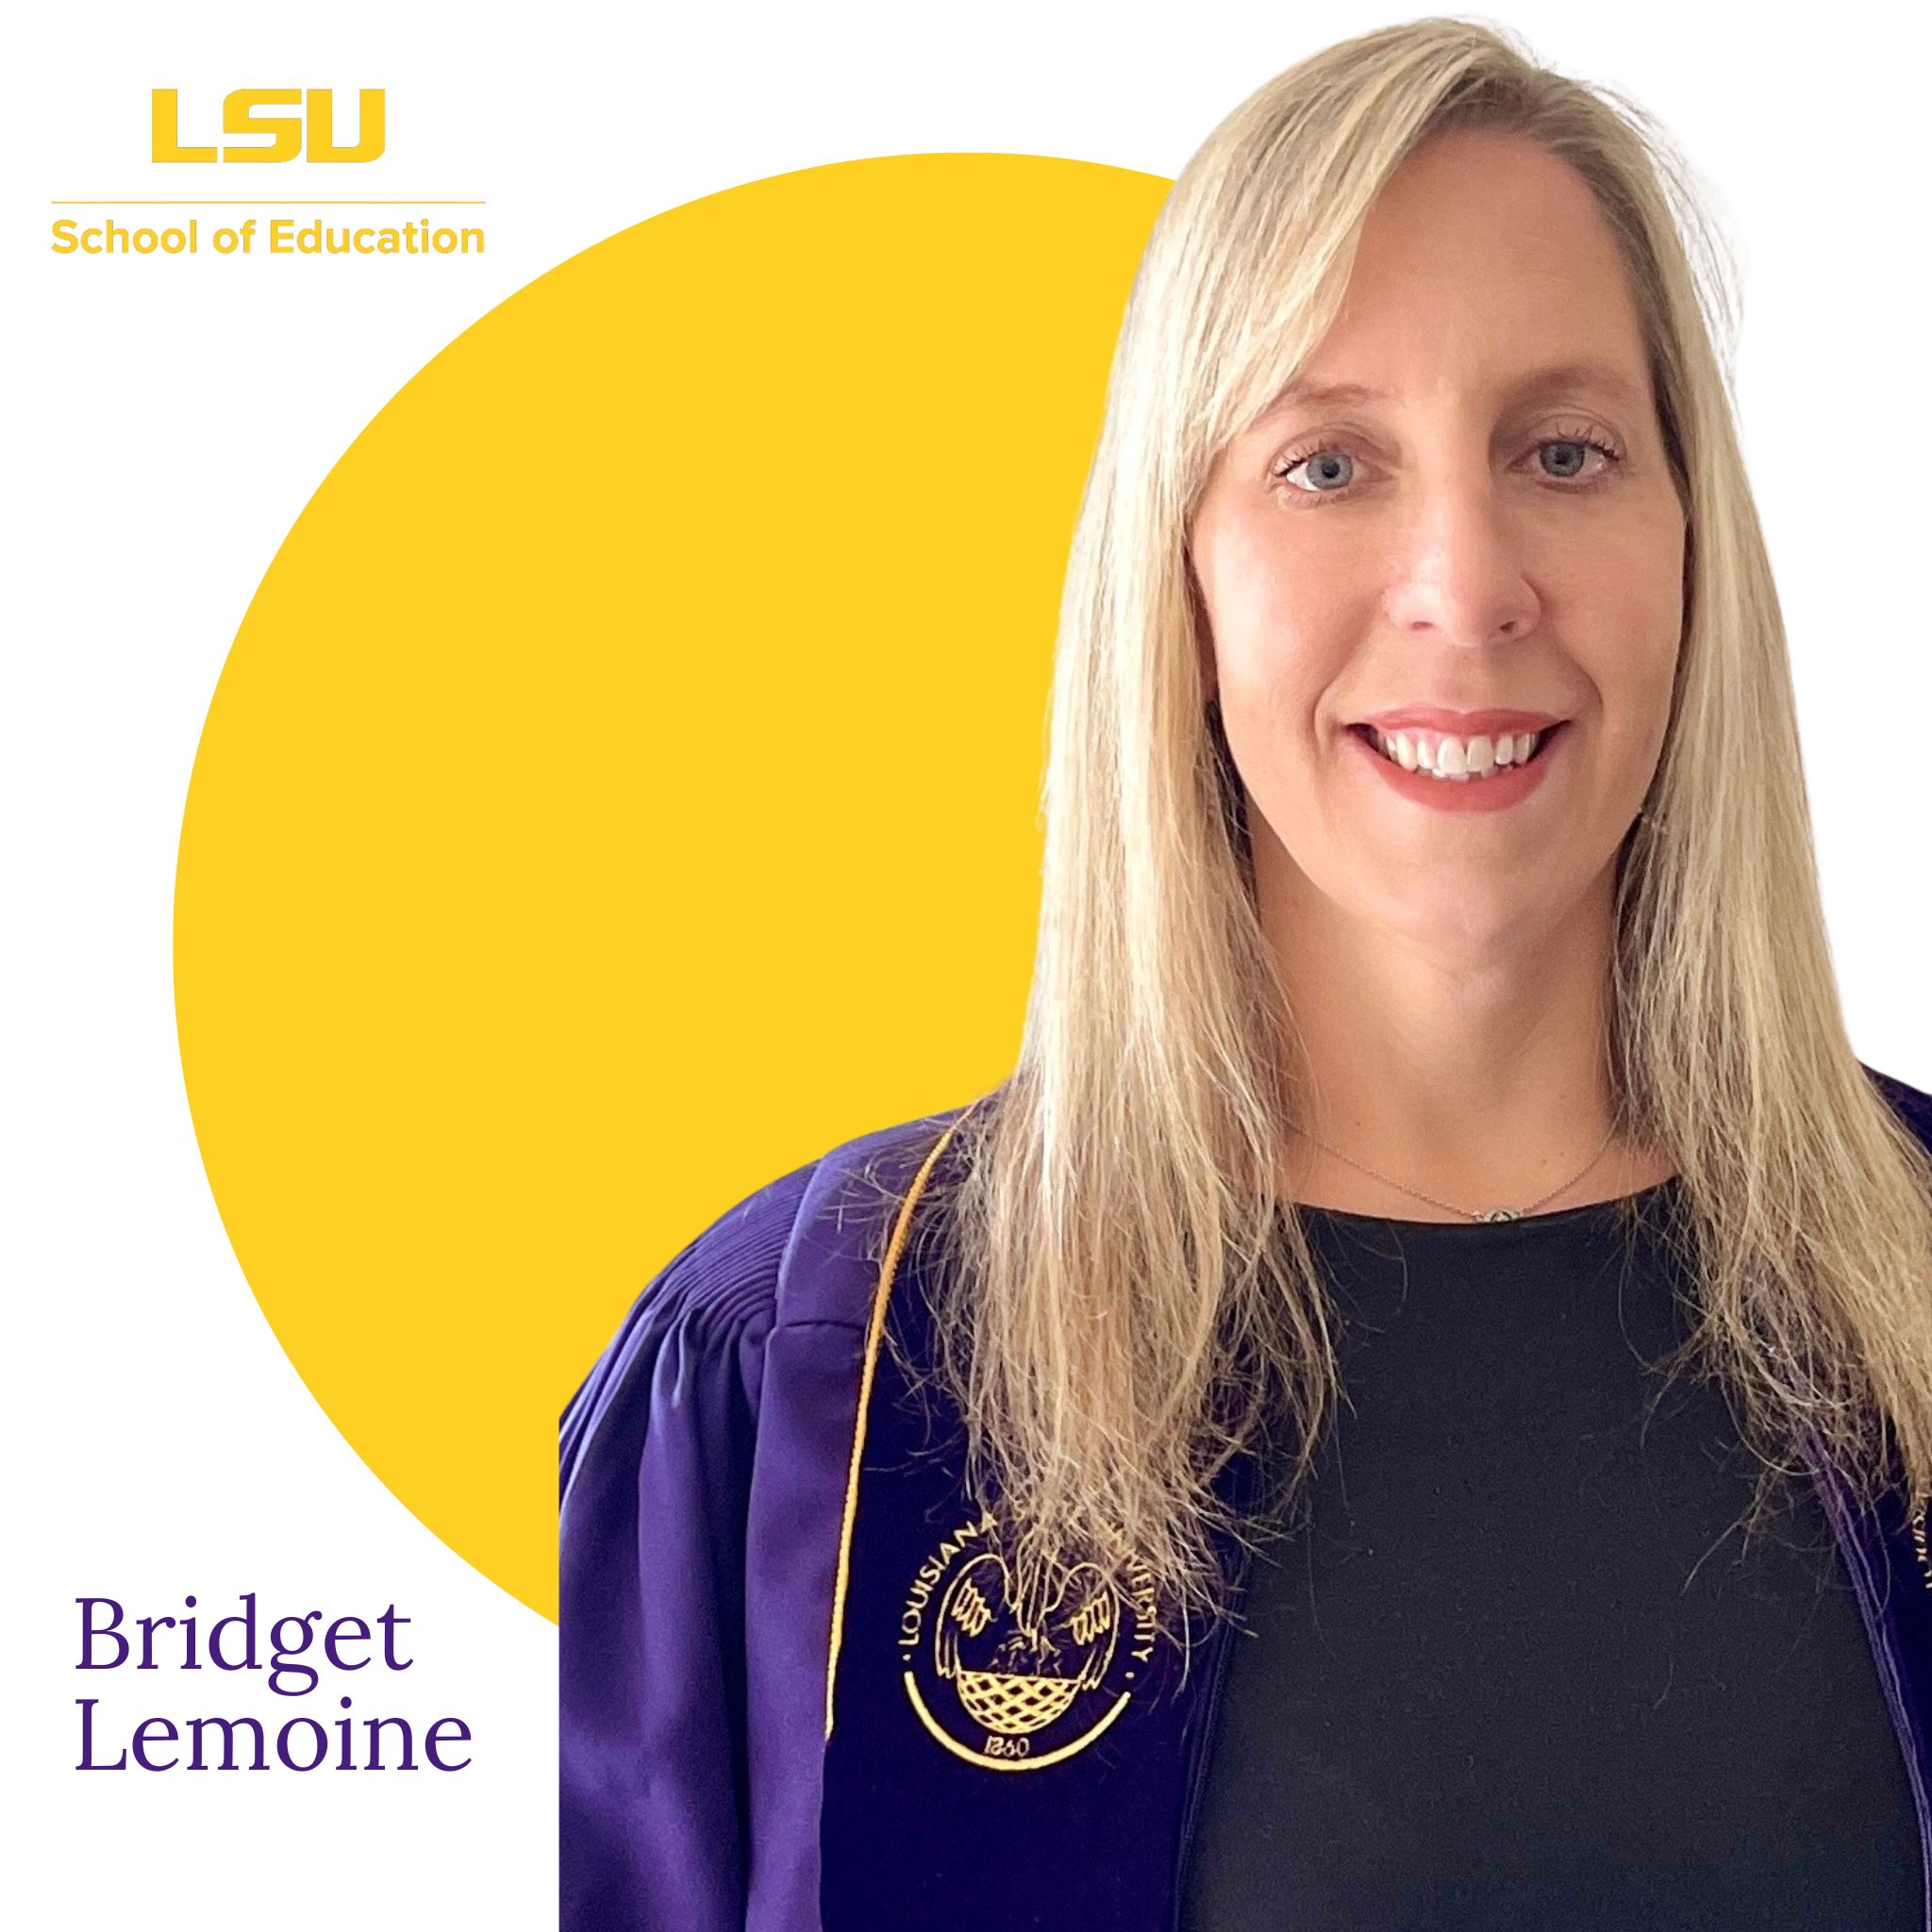 Bridget Lemoine